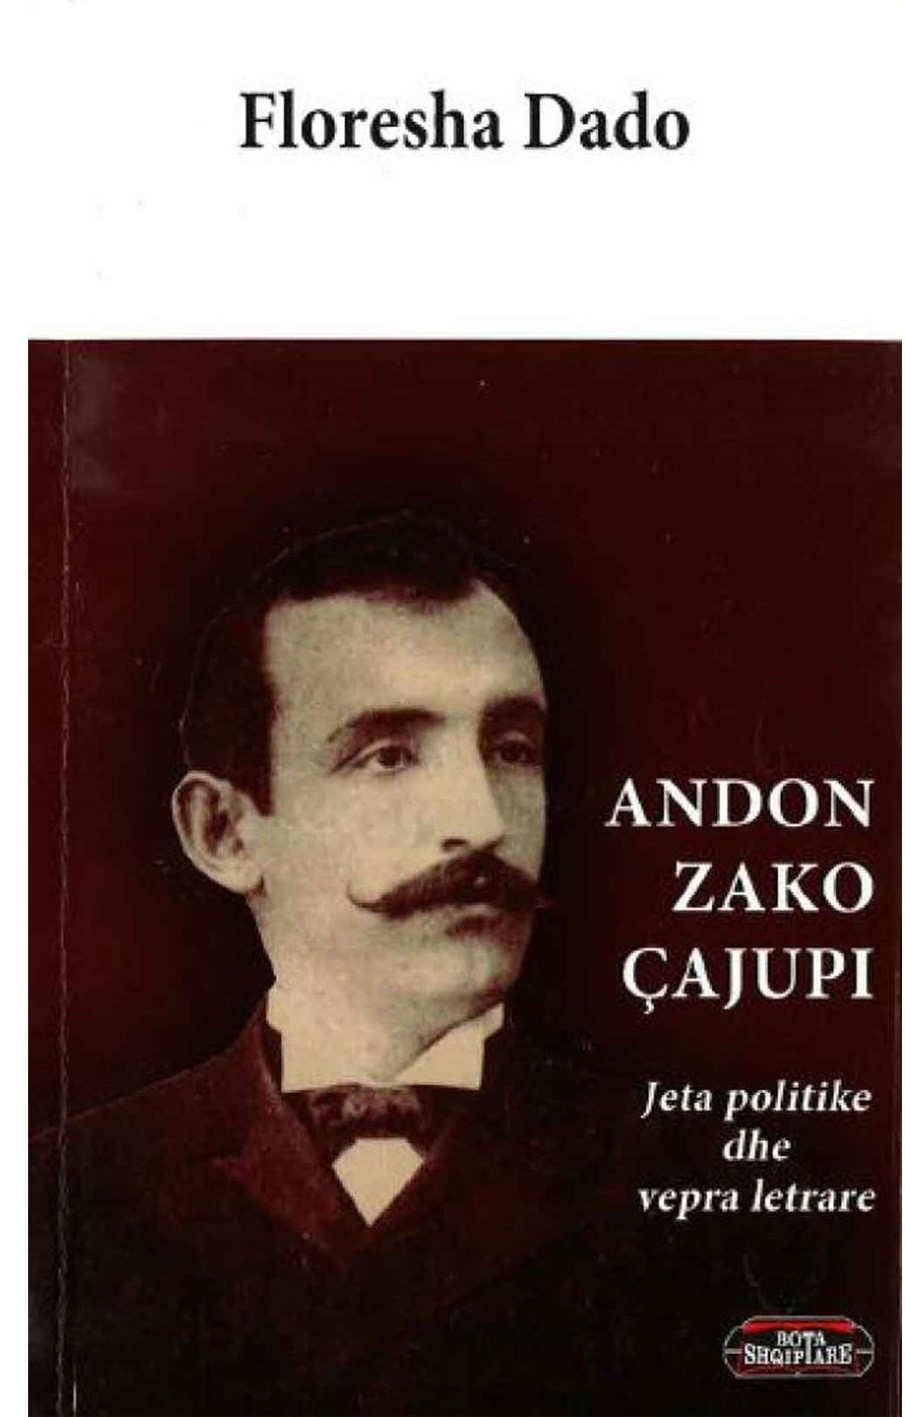 Andon Zako Cajupi, jeta politike dhe vepra letrare